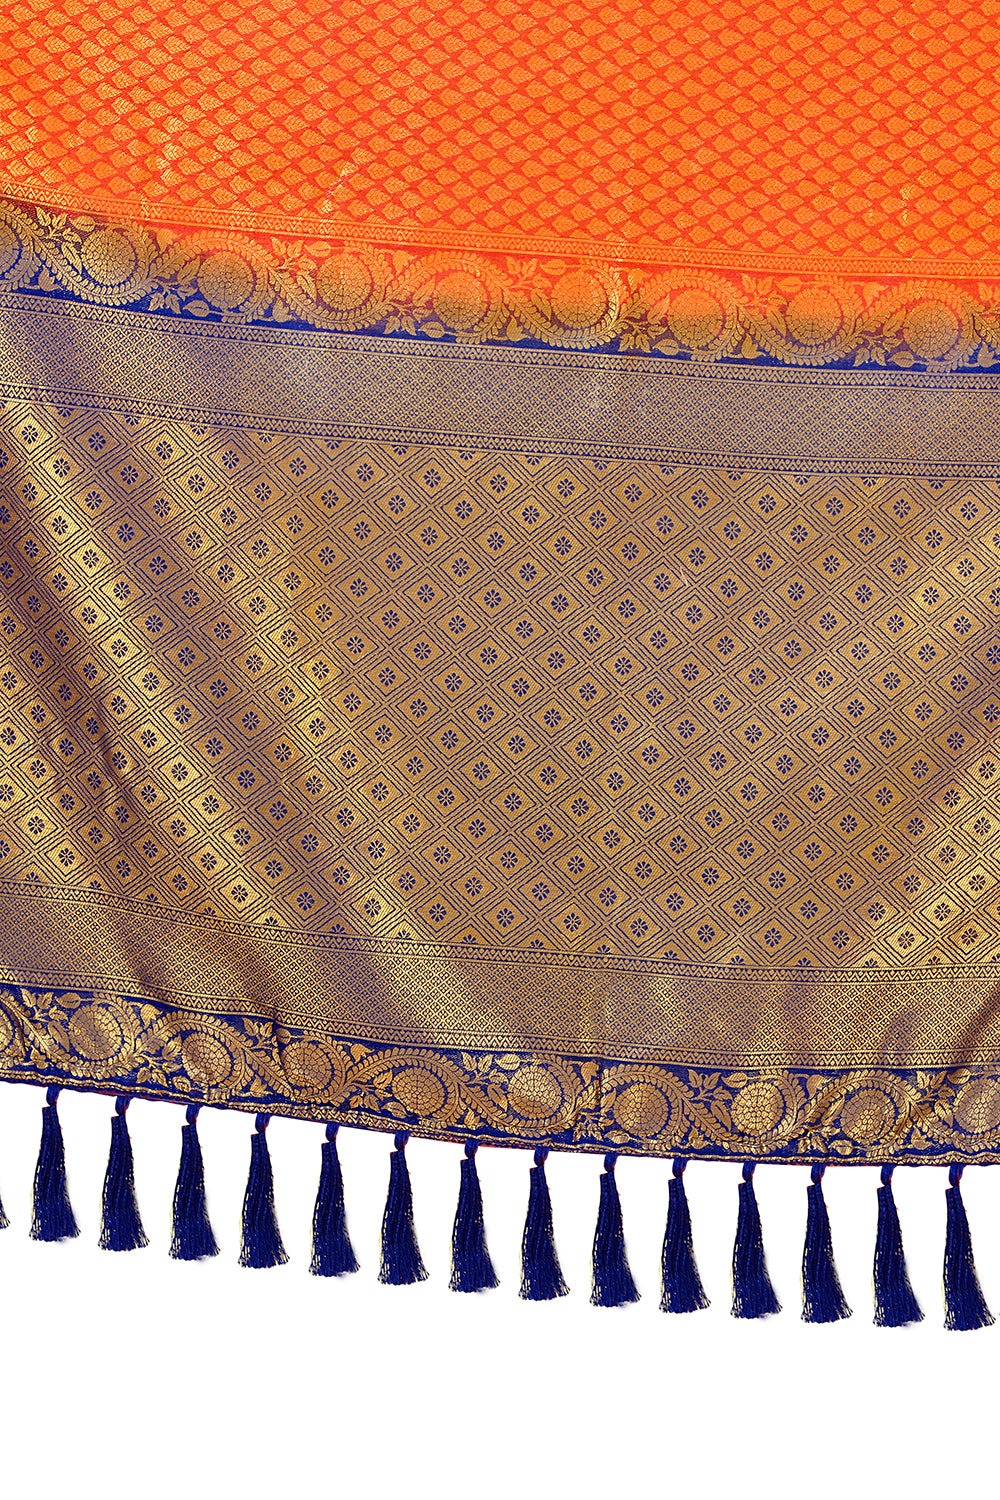 Gray and Orange color Kanjivarm silk saree